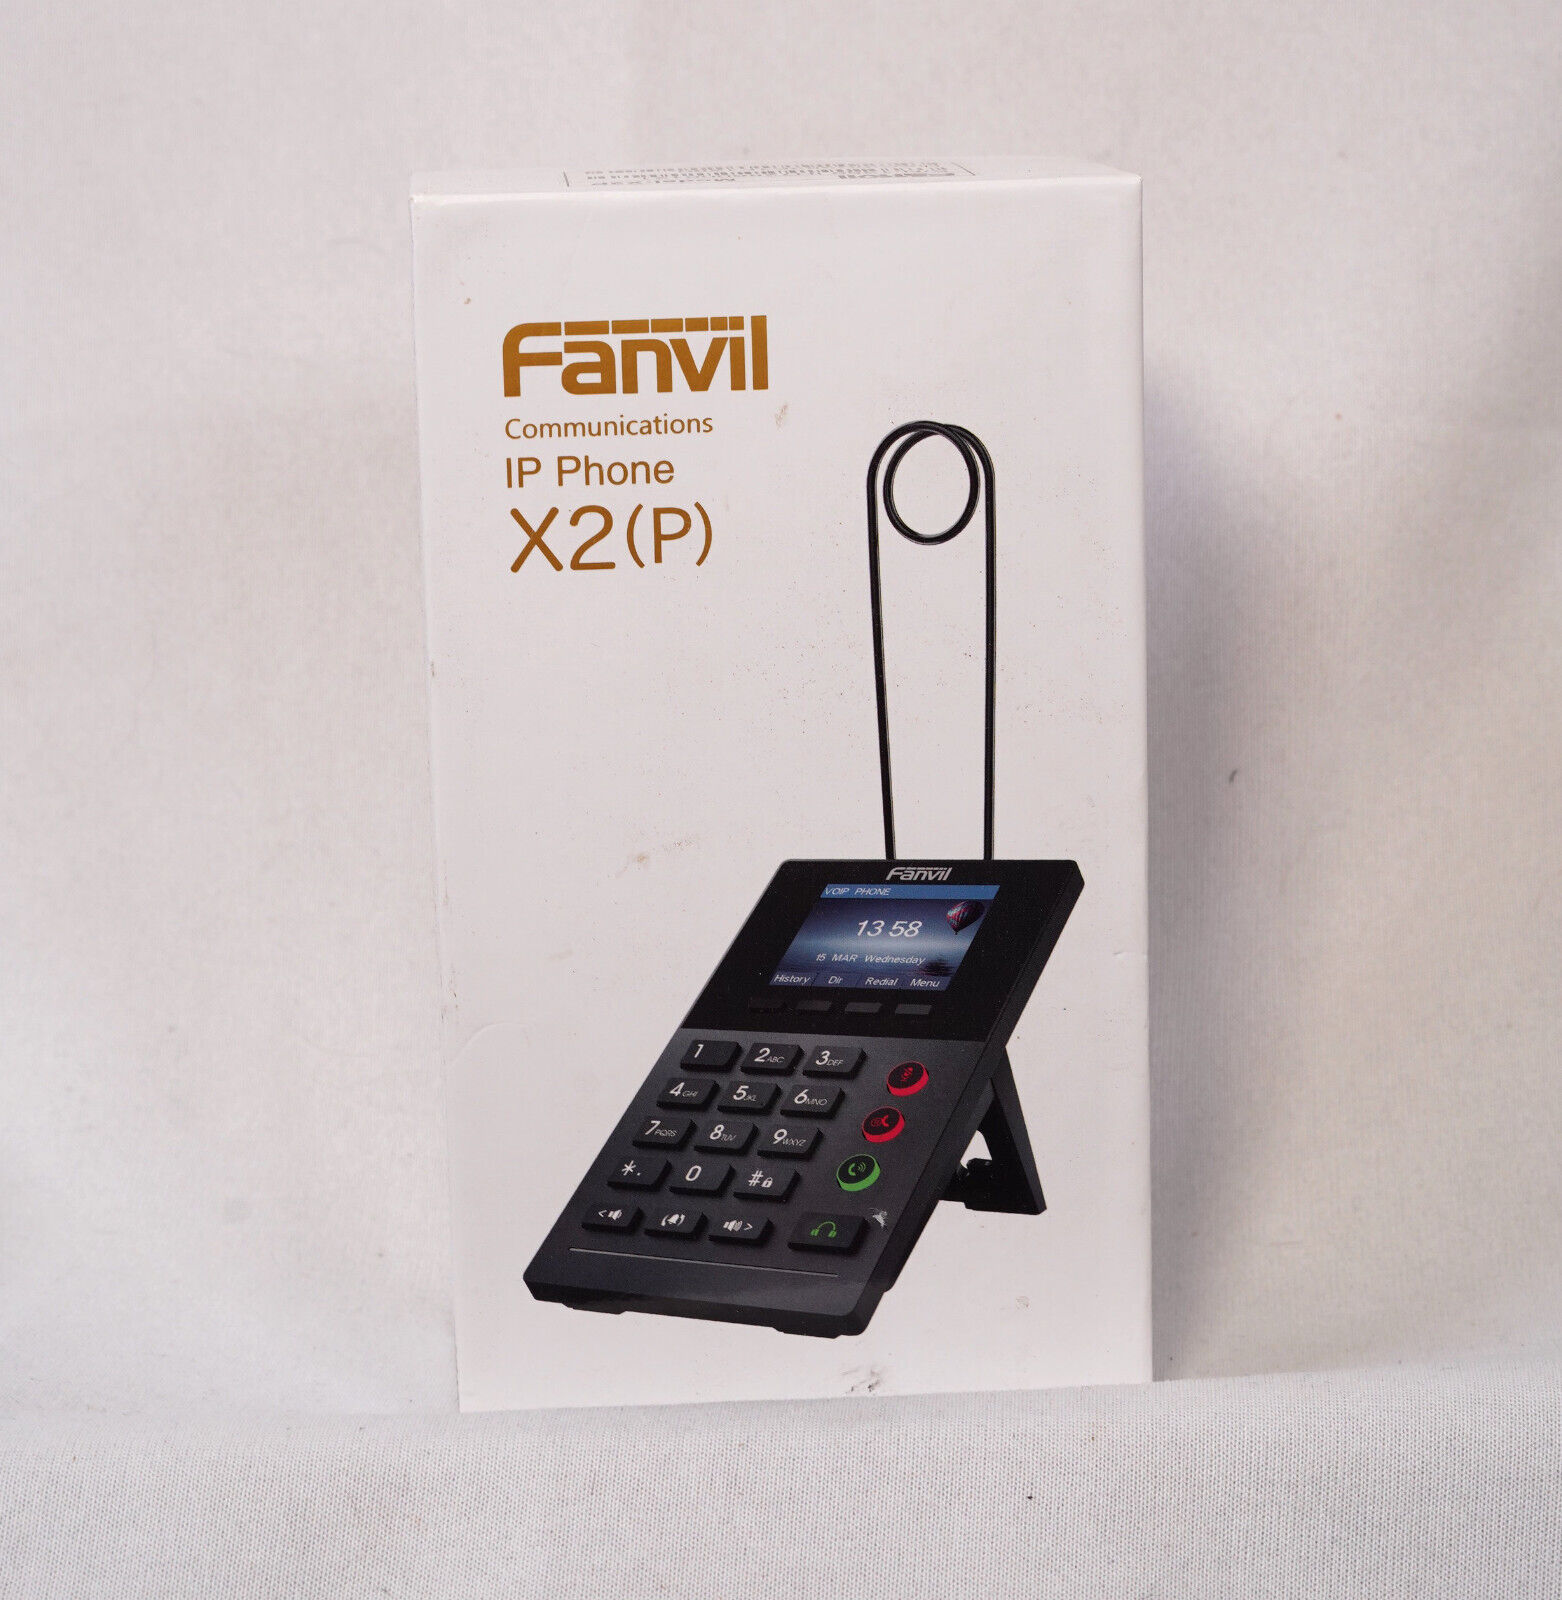 Fanvil X2P Call Center IP Phone X2(P) Communications NEW